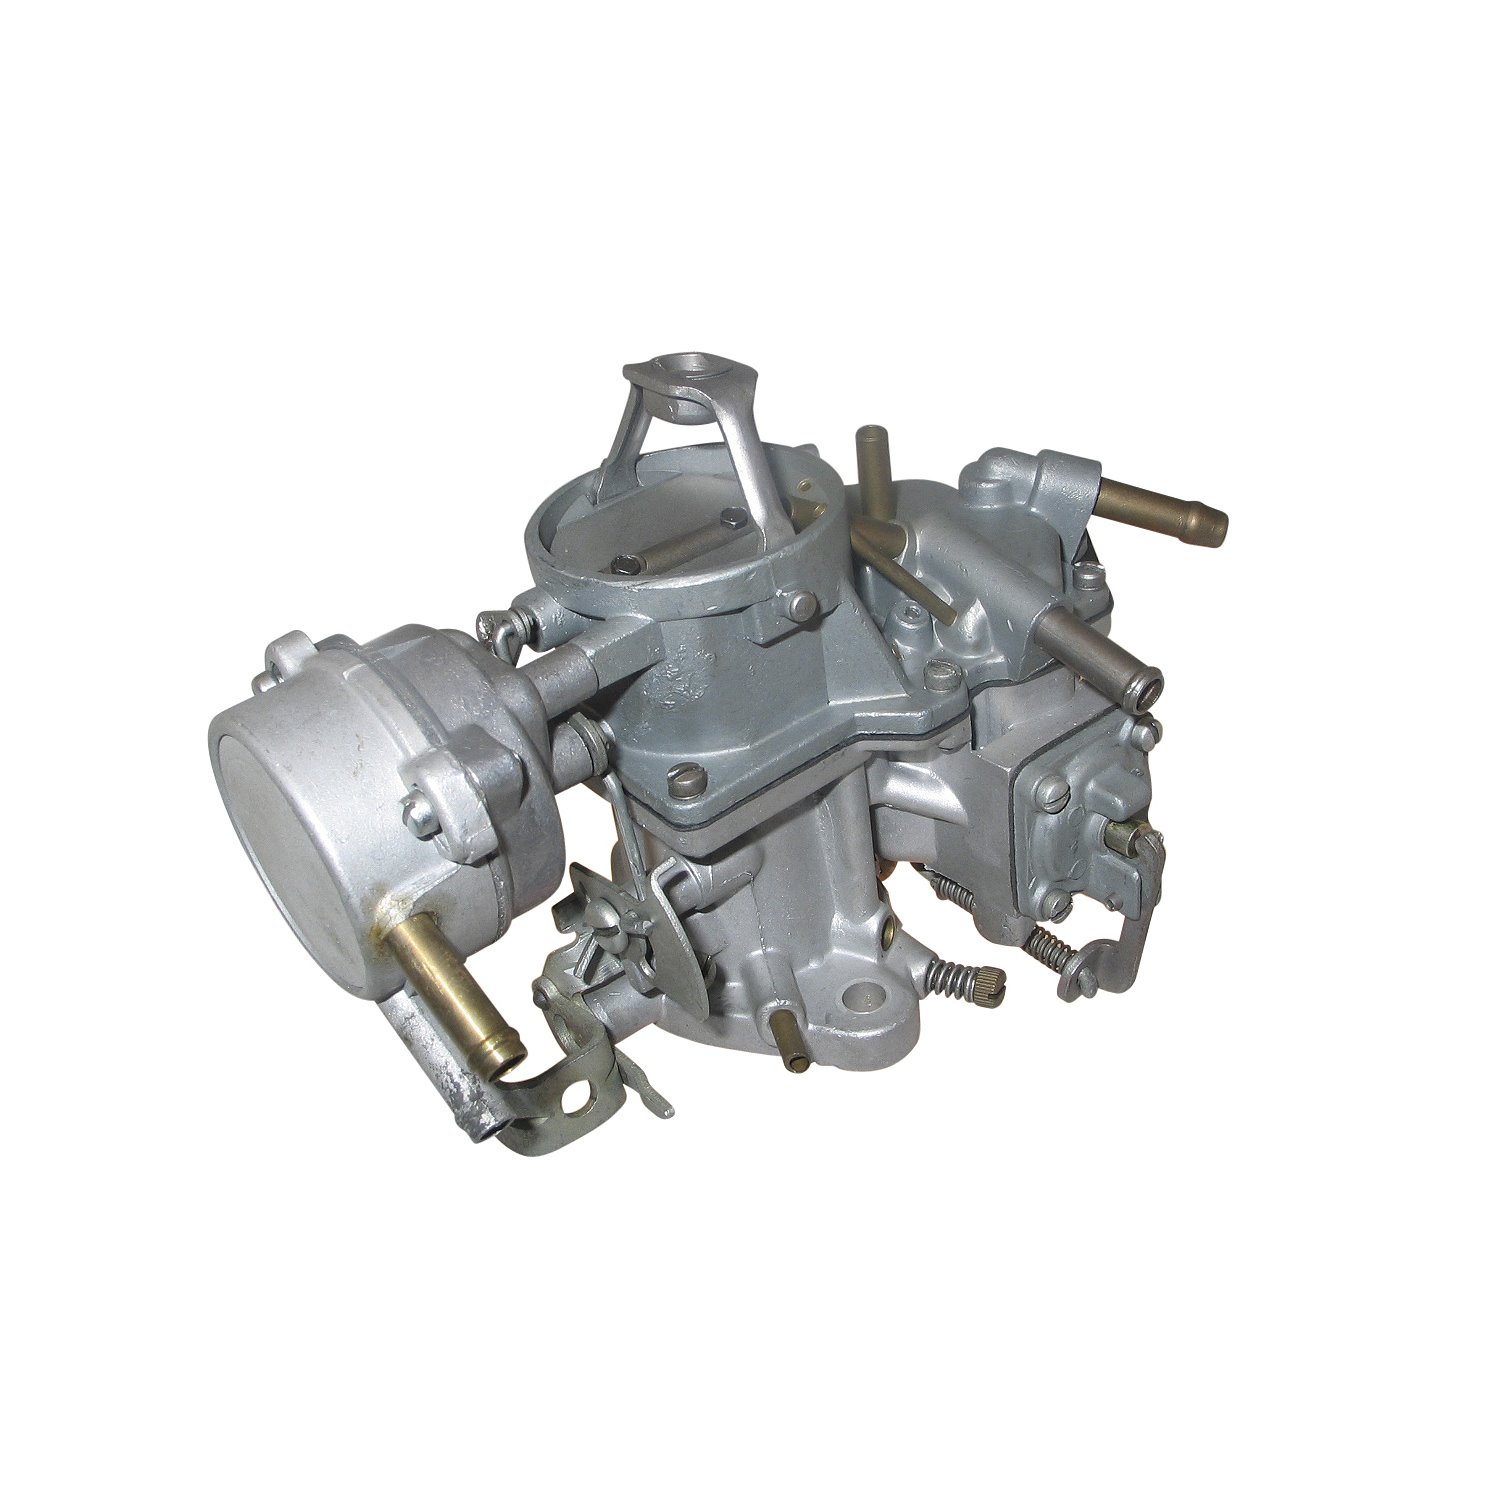 7-7585 Motorcraft Remanufactured Carburetor